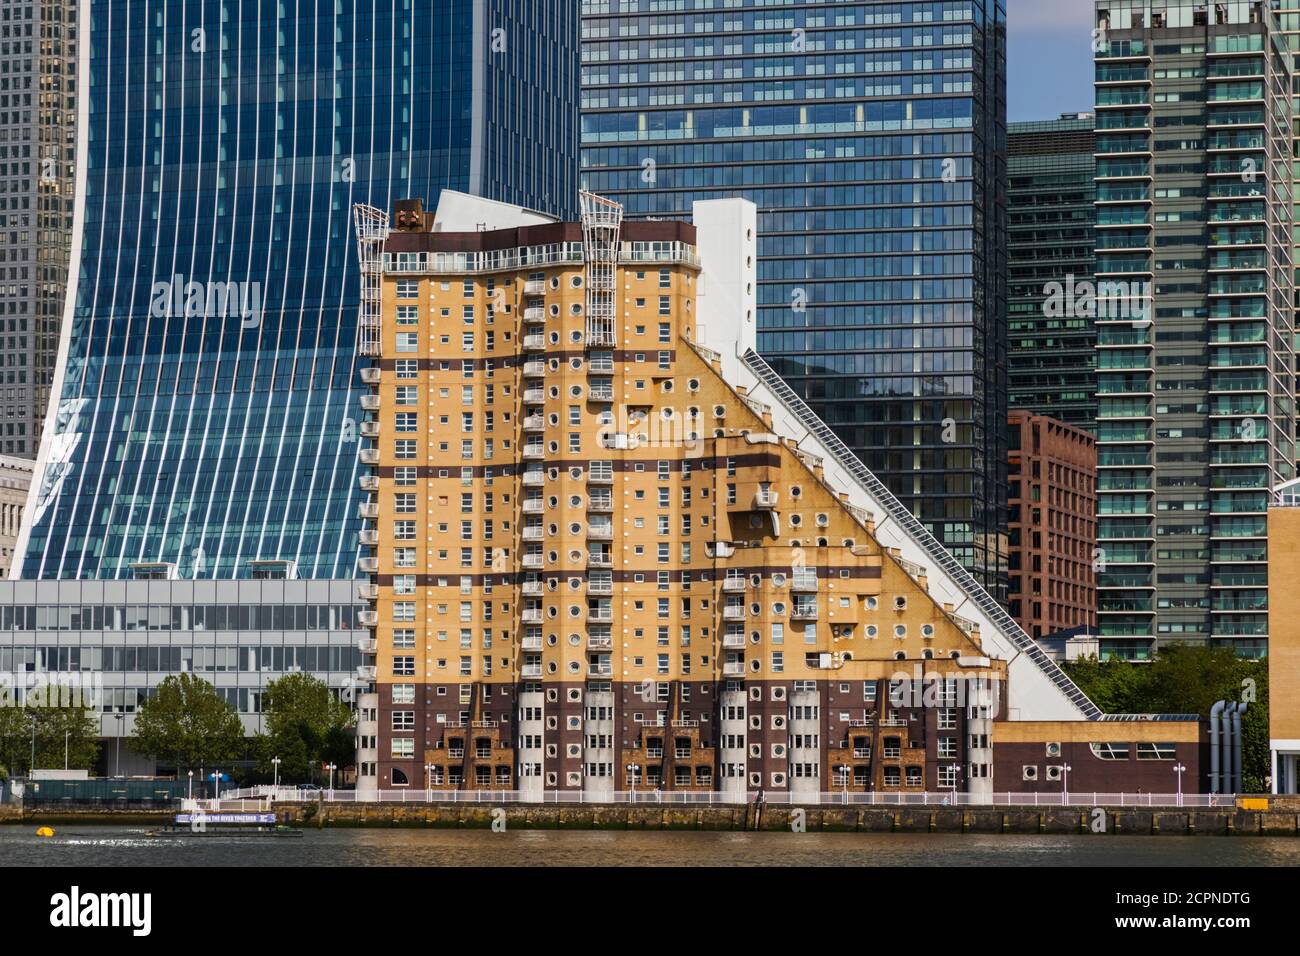 England, London, Docklands, River Thames and Canary Wharf Skyline Stock Photo